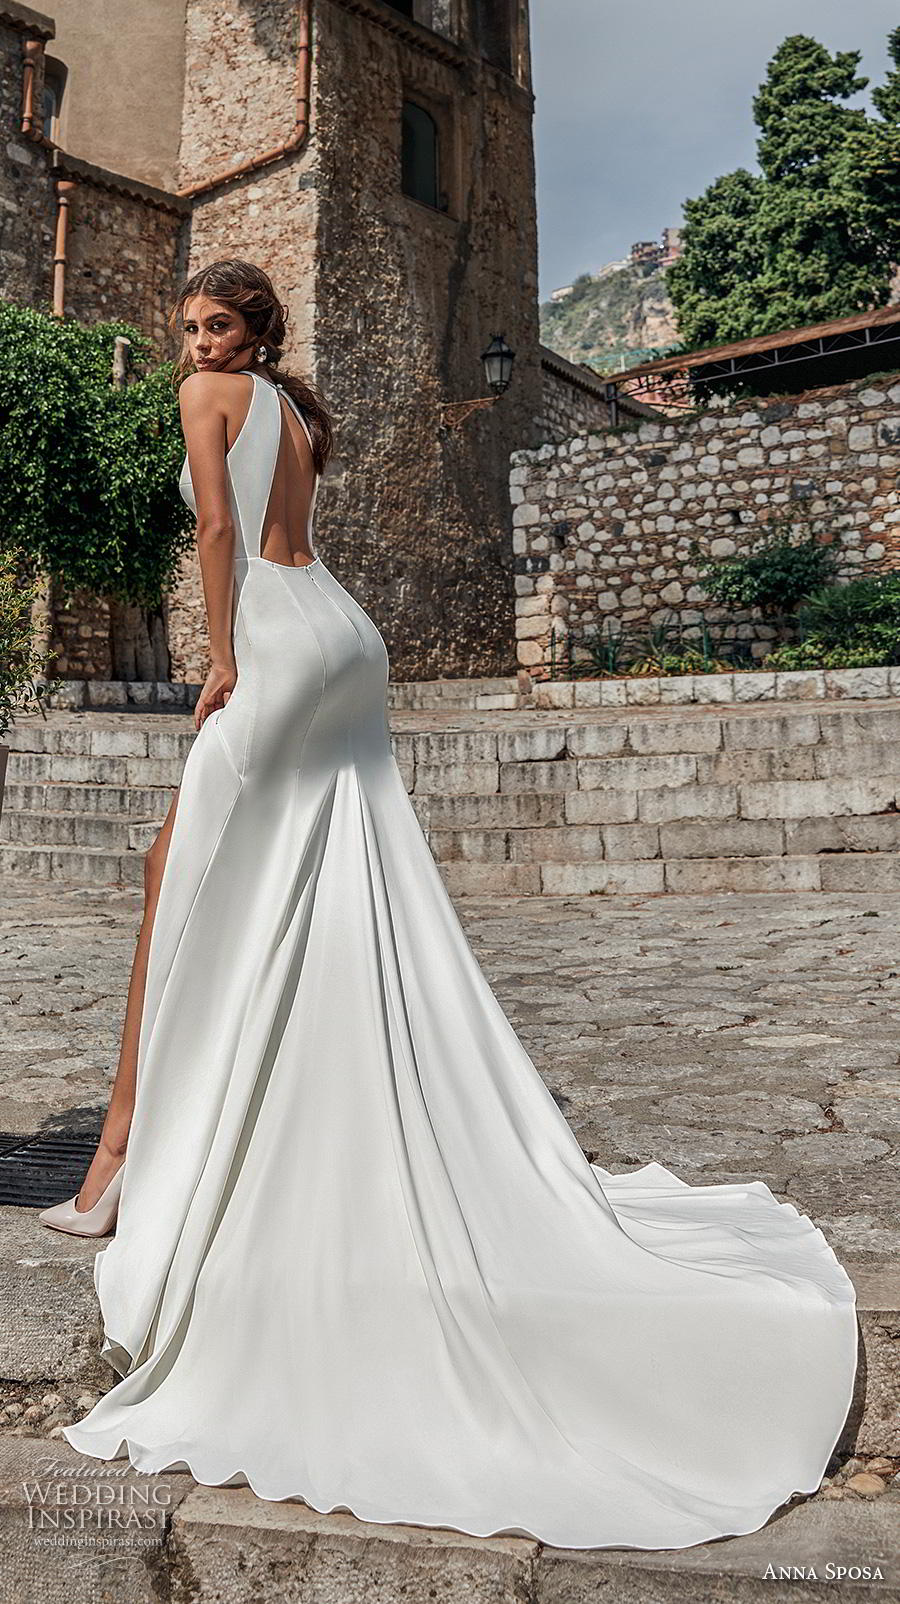 Anna Sposa 2019 Wedding Dresses — “Bella Sicilia” Bridal Collection ...